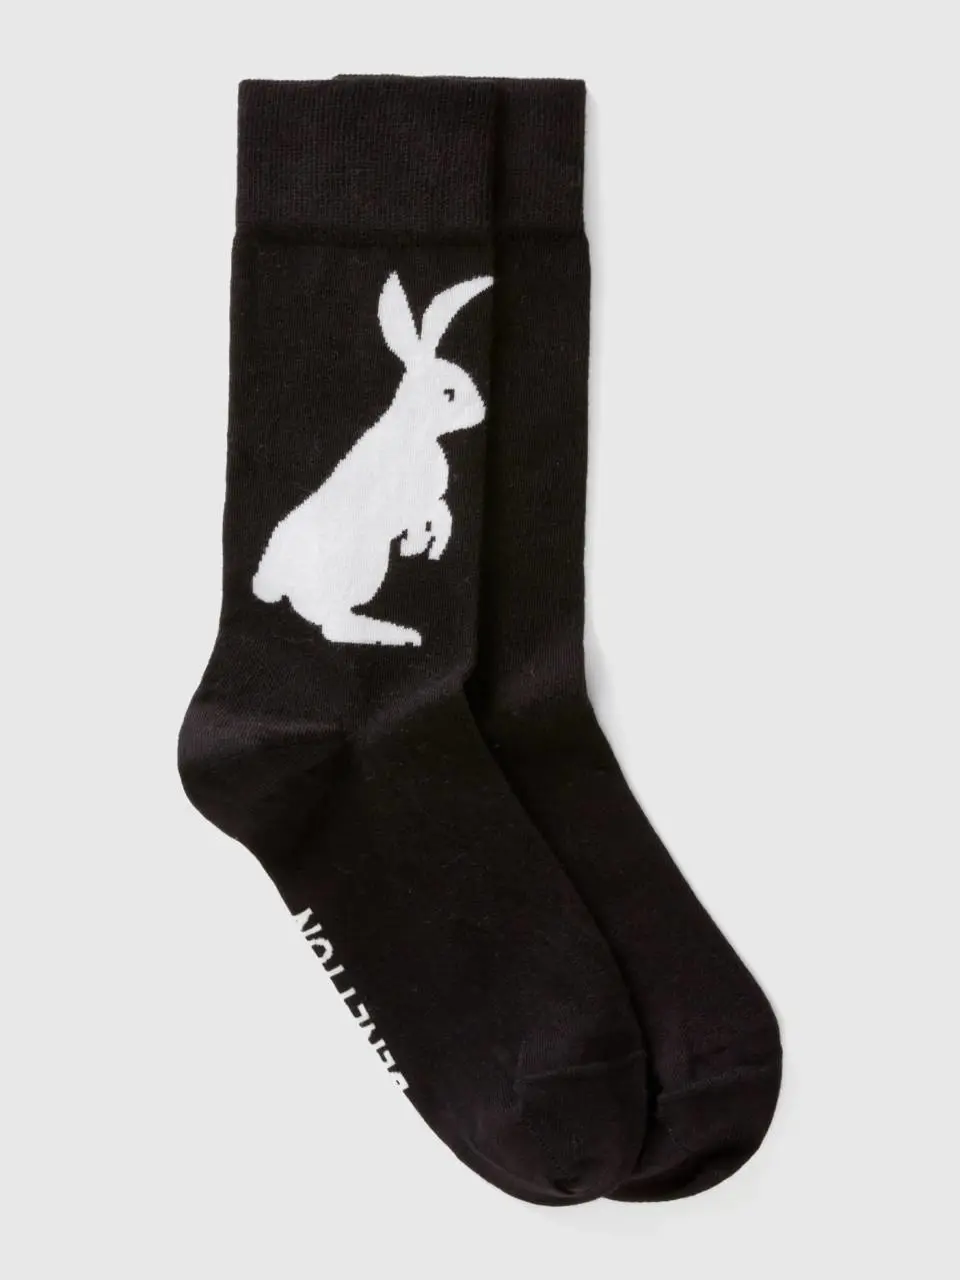 Benetton black socks with bunny design. 1